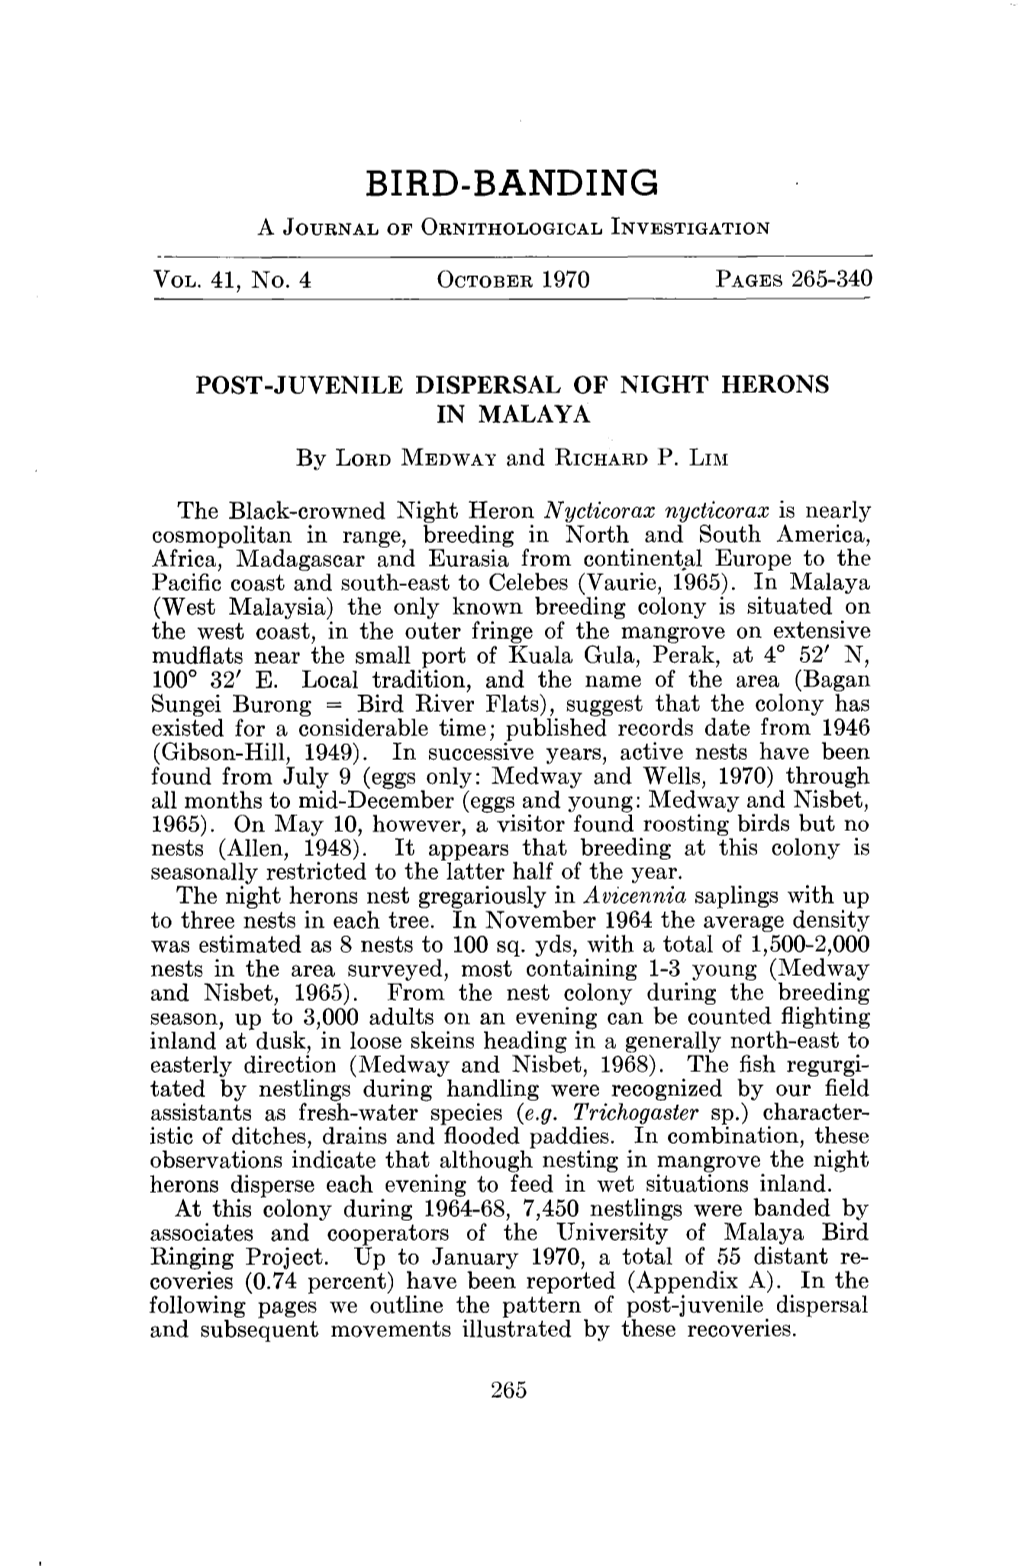 Post-Juvenile Dispersal of Night Herons in Malaya